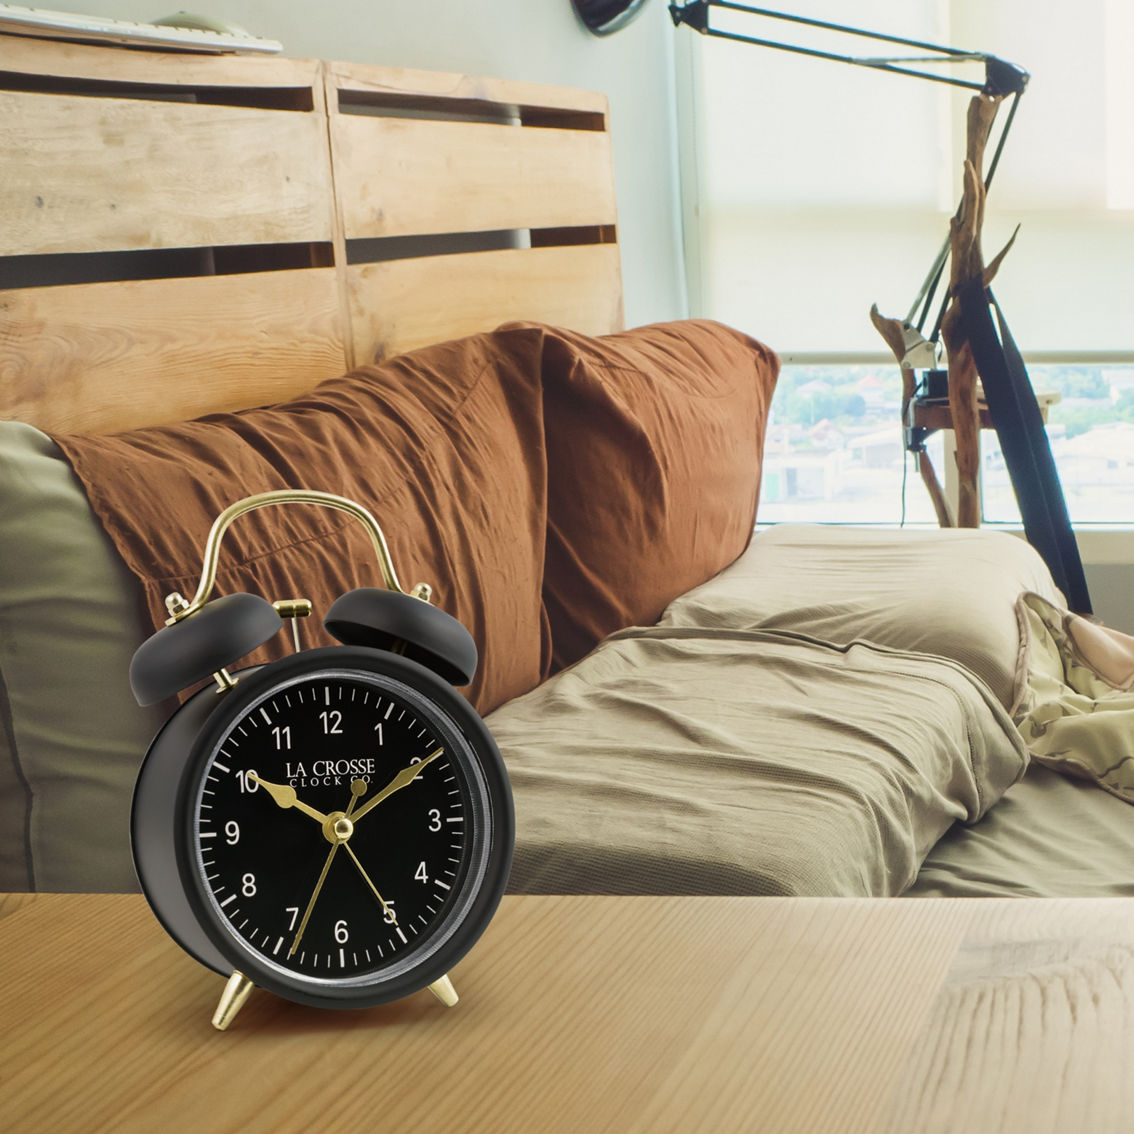 La Crosse Twin Bell Alarm Clock - Image 2 of 2